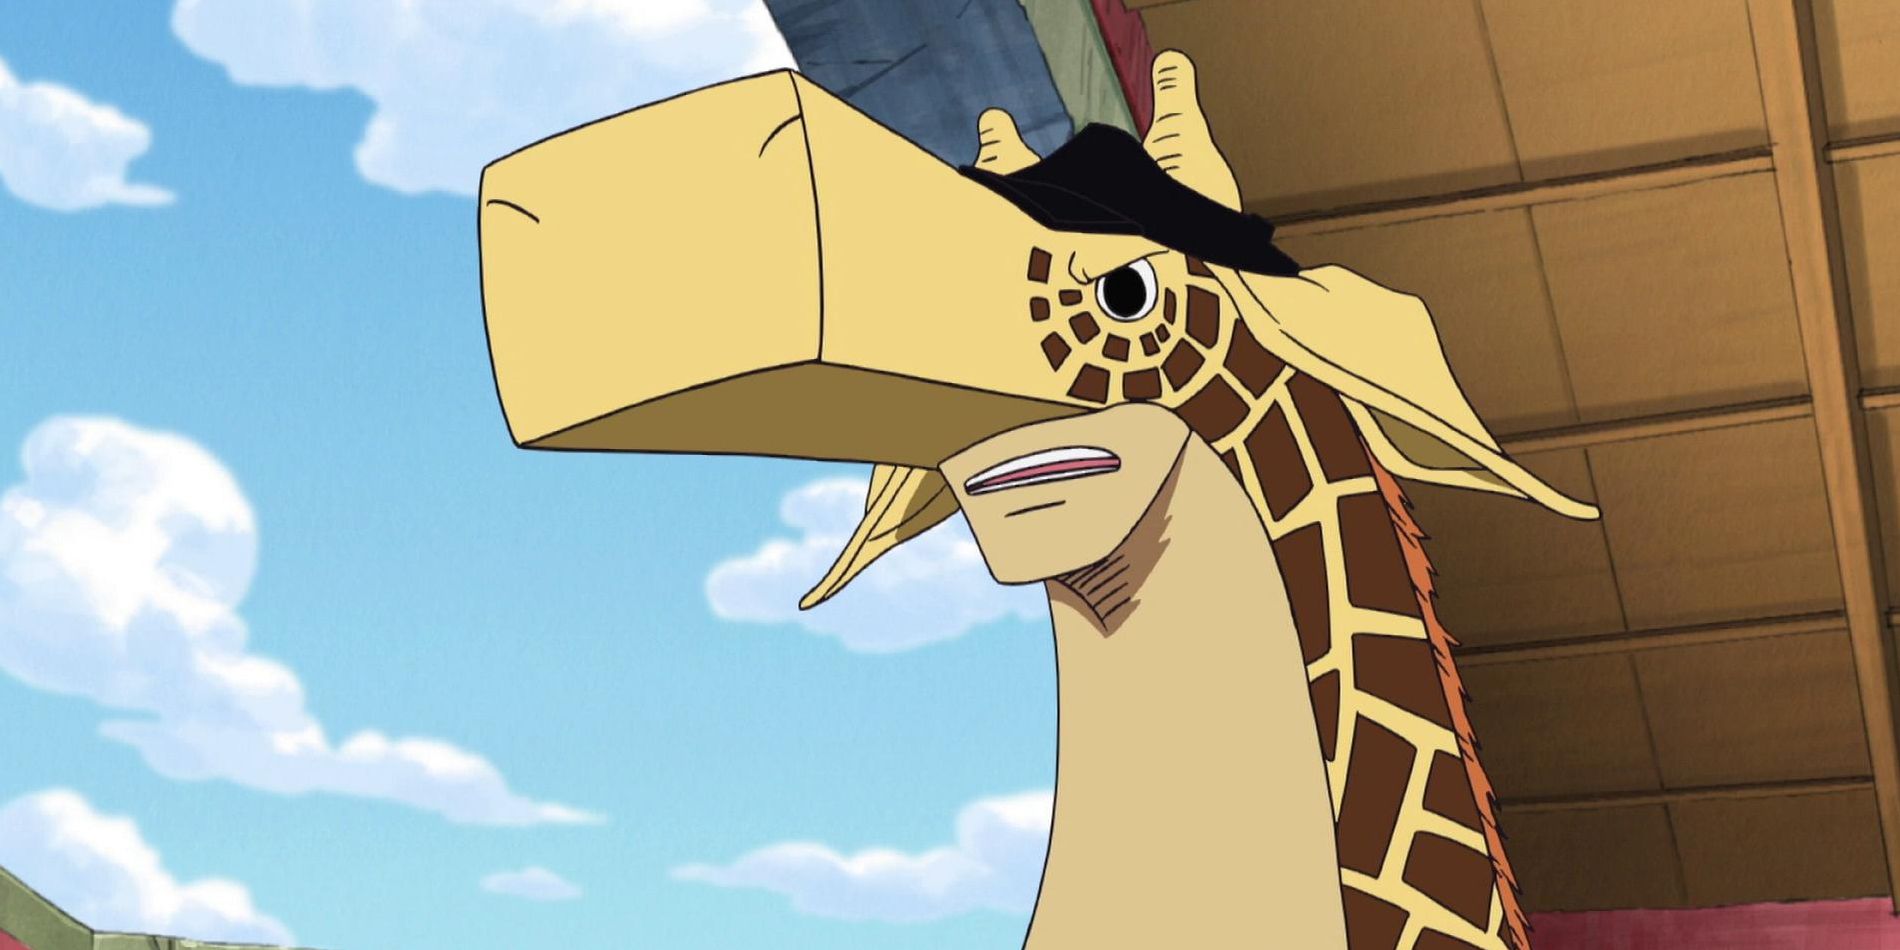 Kaku in giraffe form